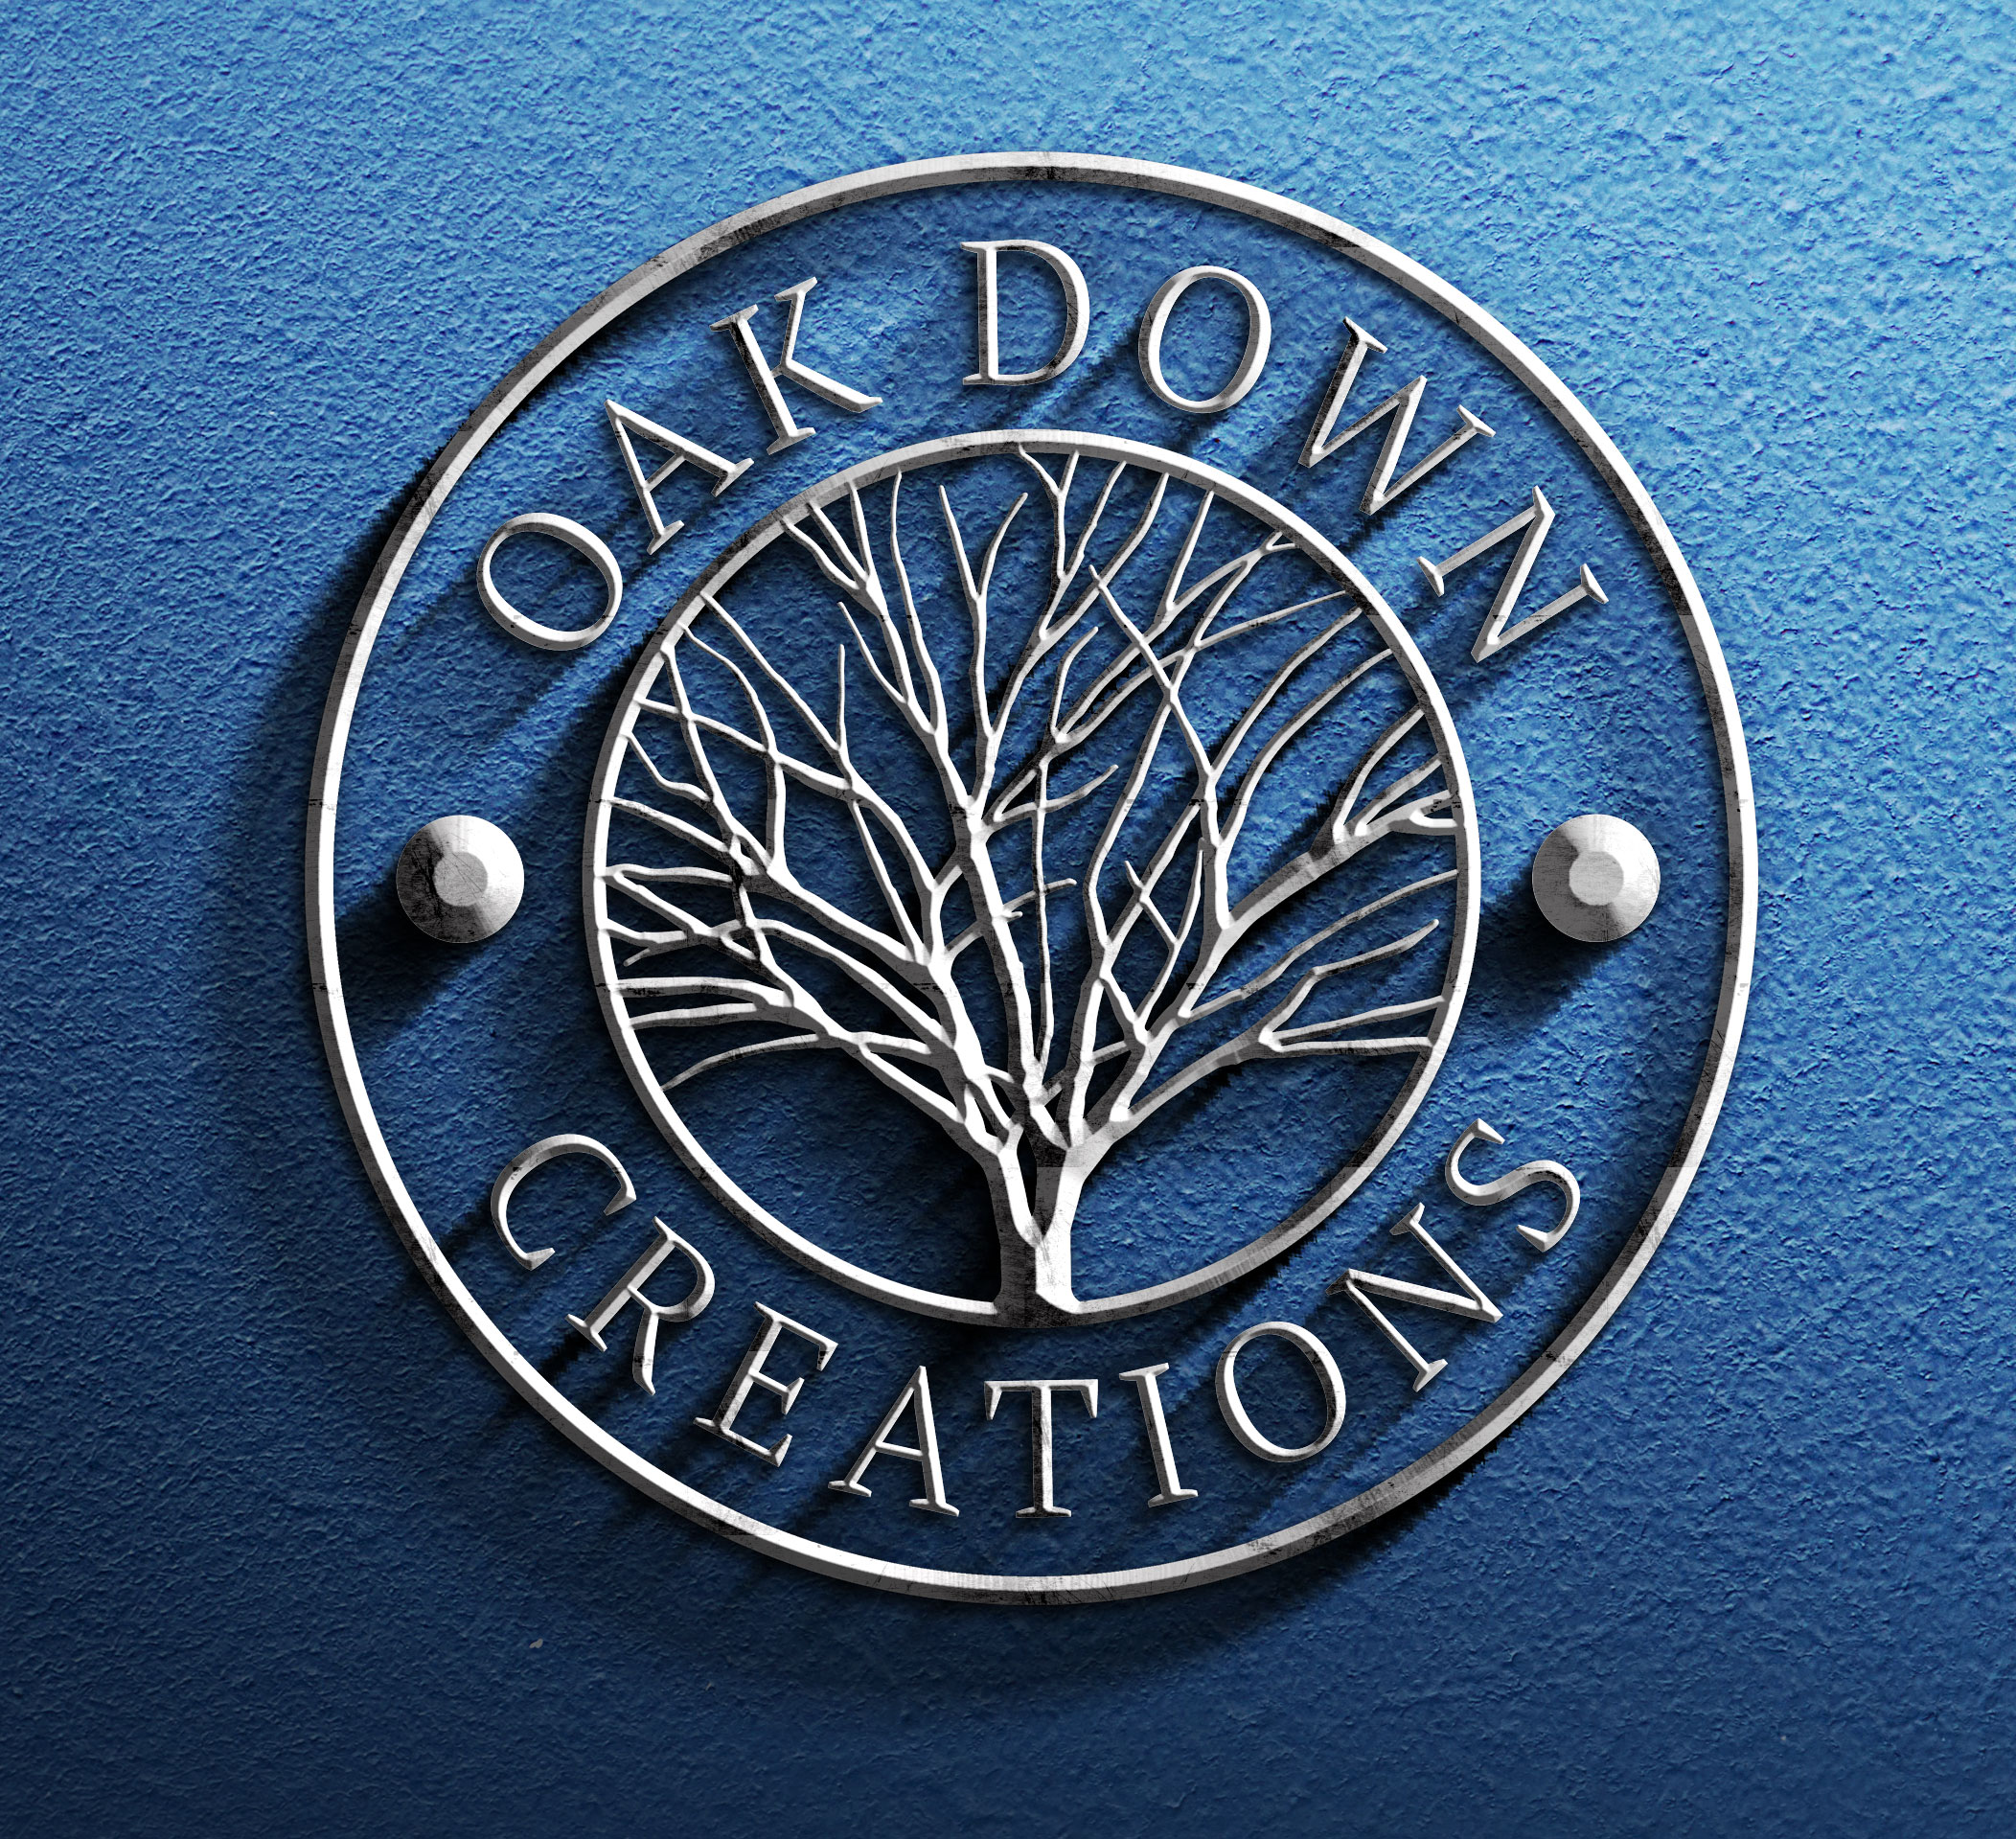 Oak Down Creations